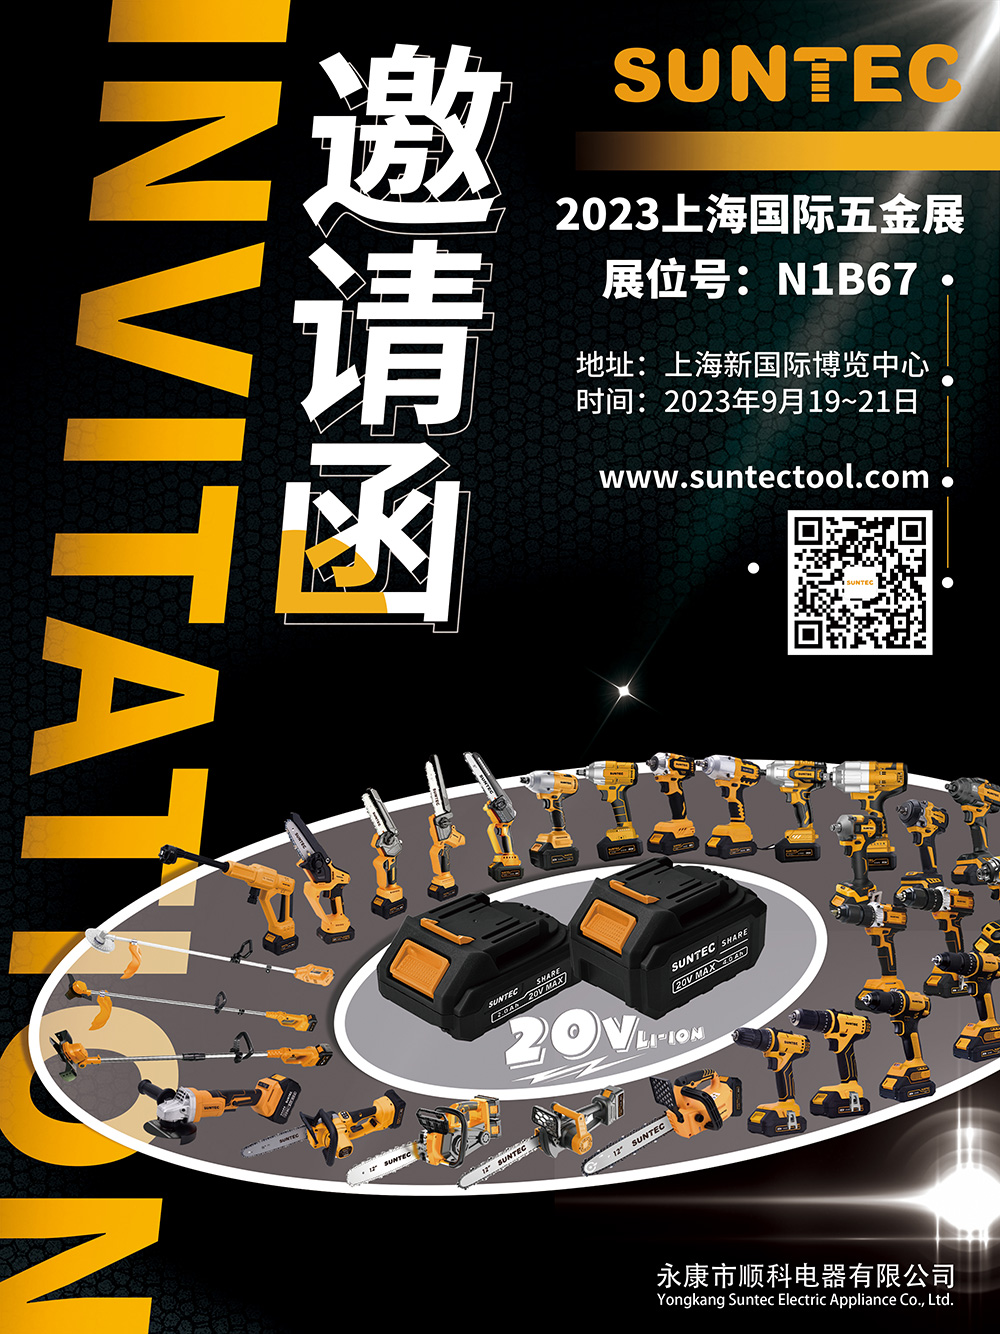 Bienvenue à China International Hardware Show 2023